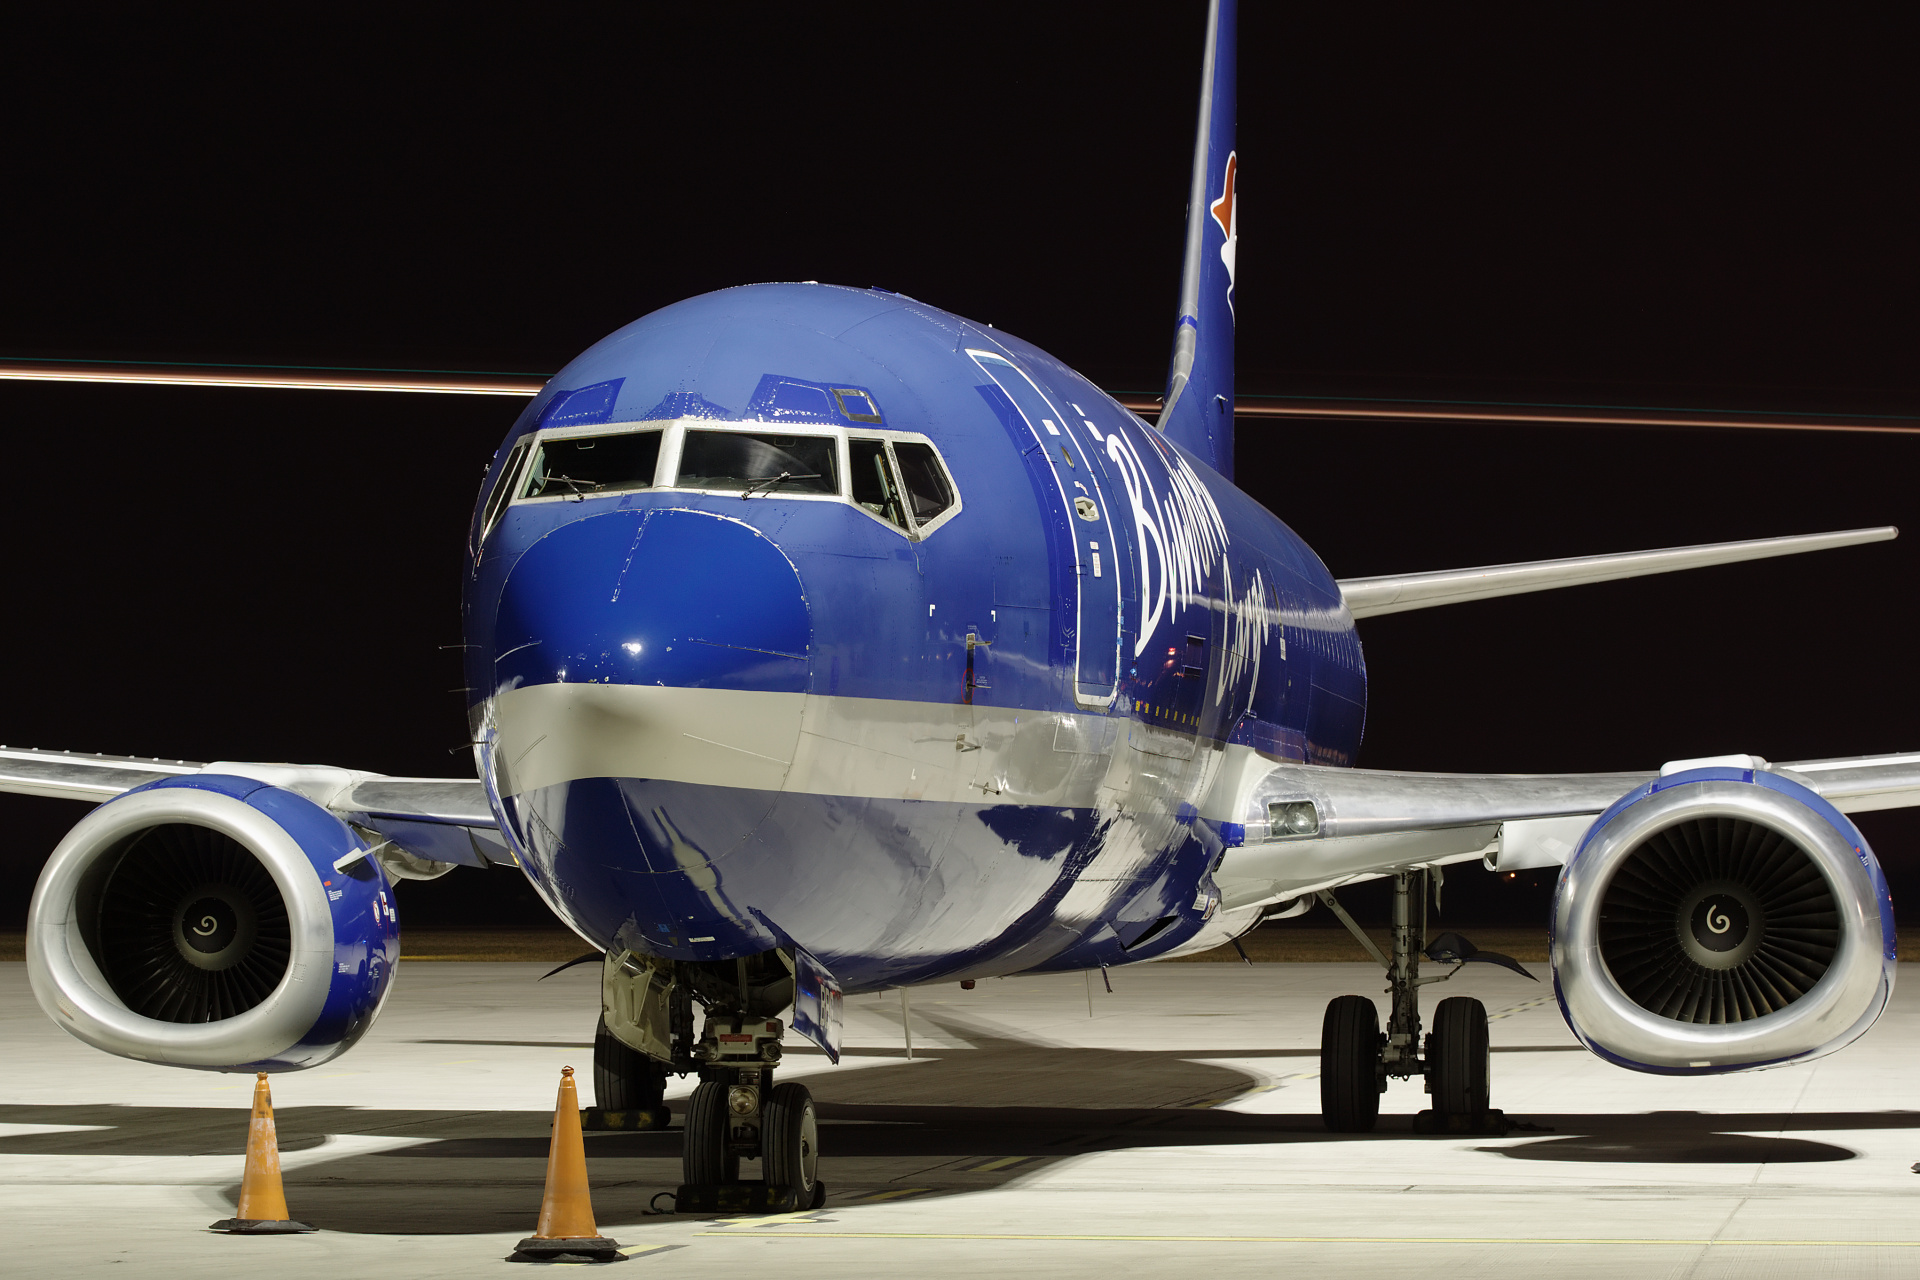 BDSF, TF-BBG (Samoloty » Spotting na EPWA » Boeing 737-300F » Bluebird Nordic (Bluebird Cargo))